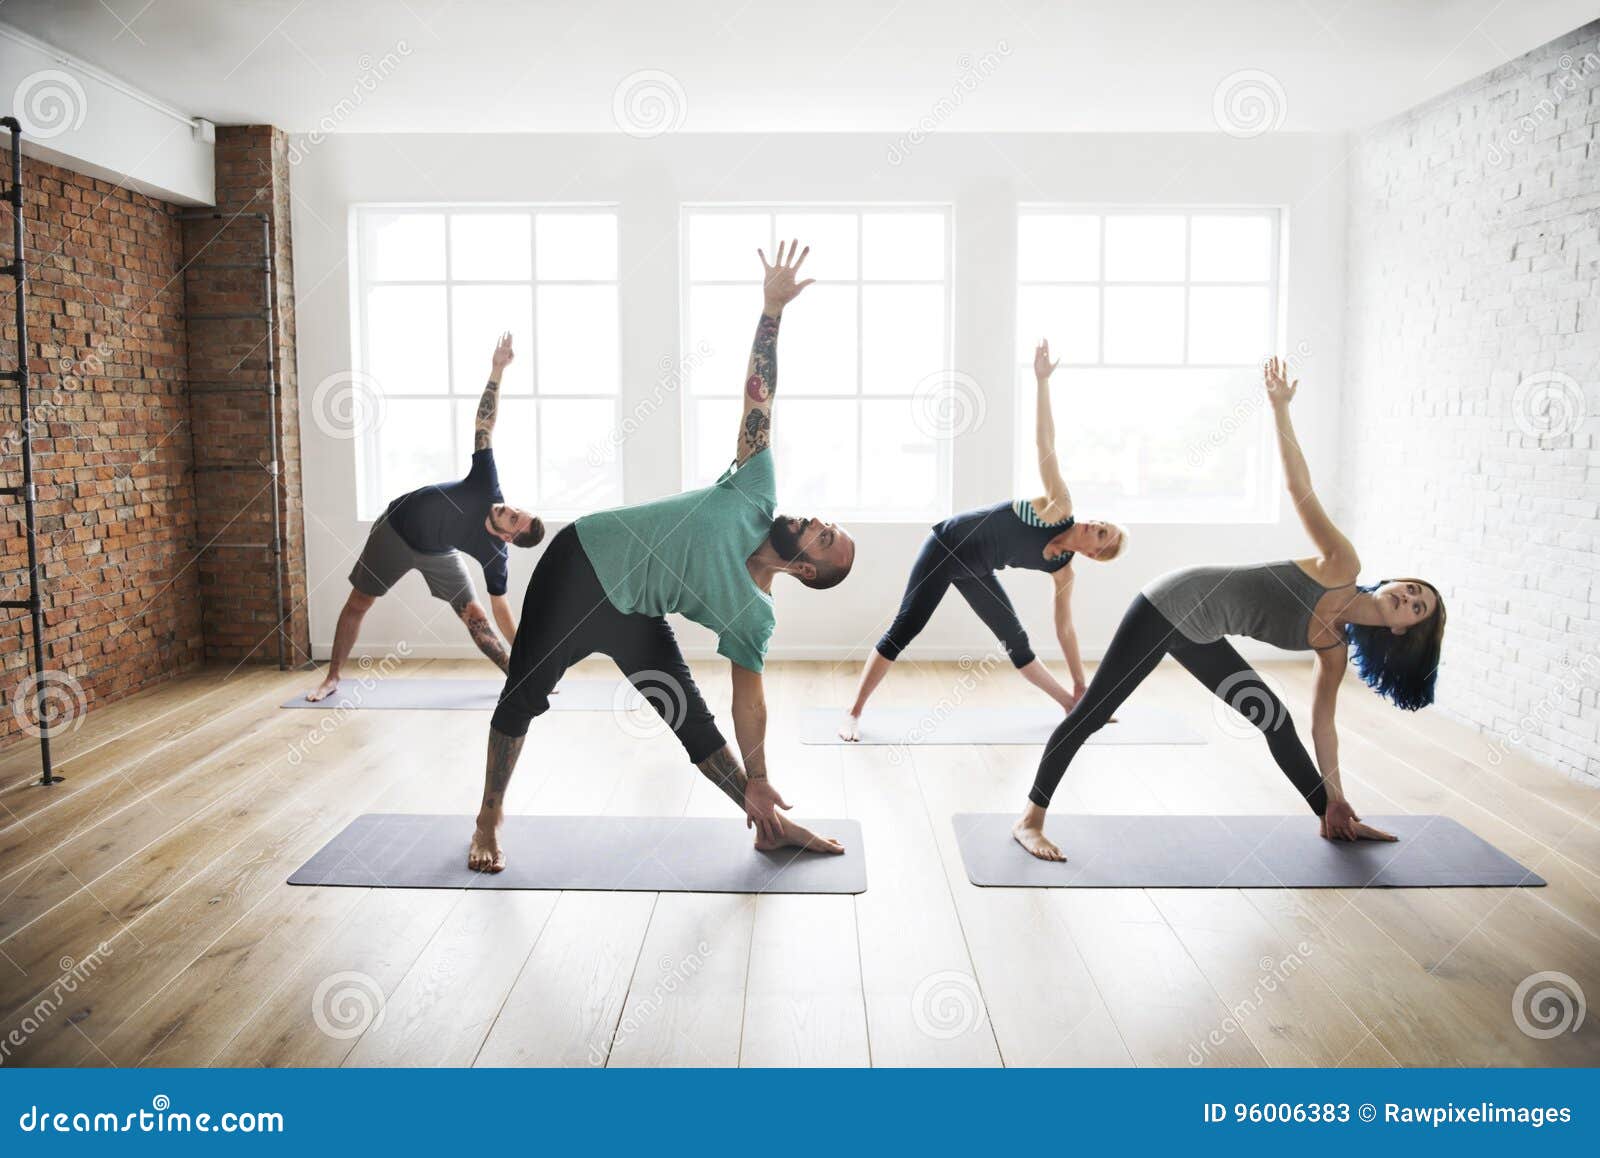 yoga practice exercise class health concept